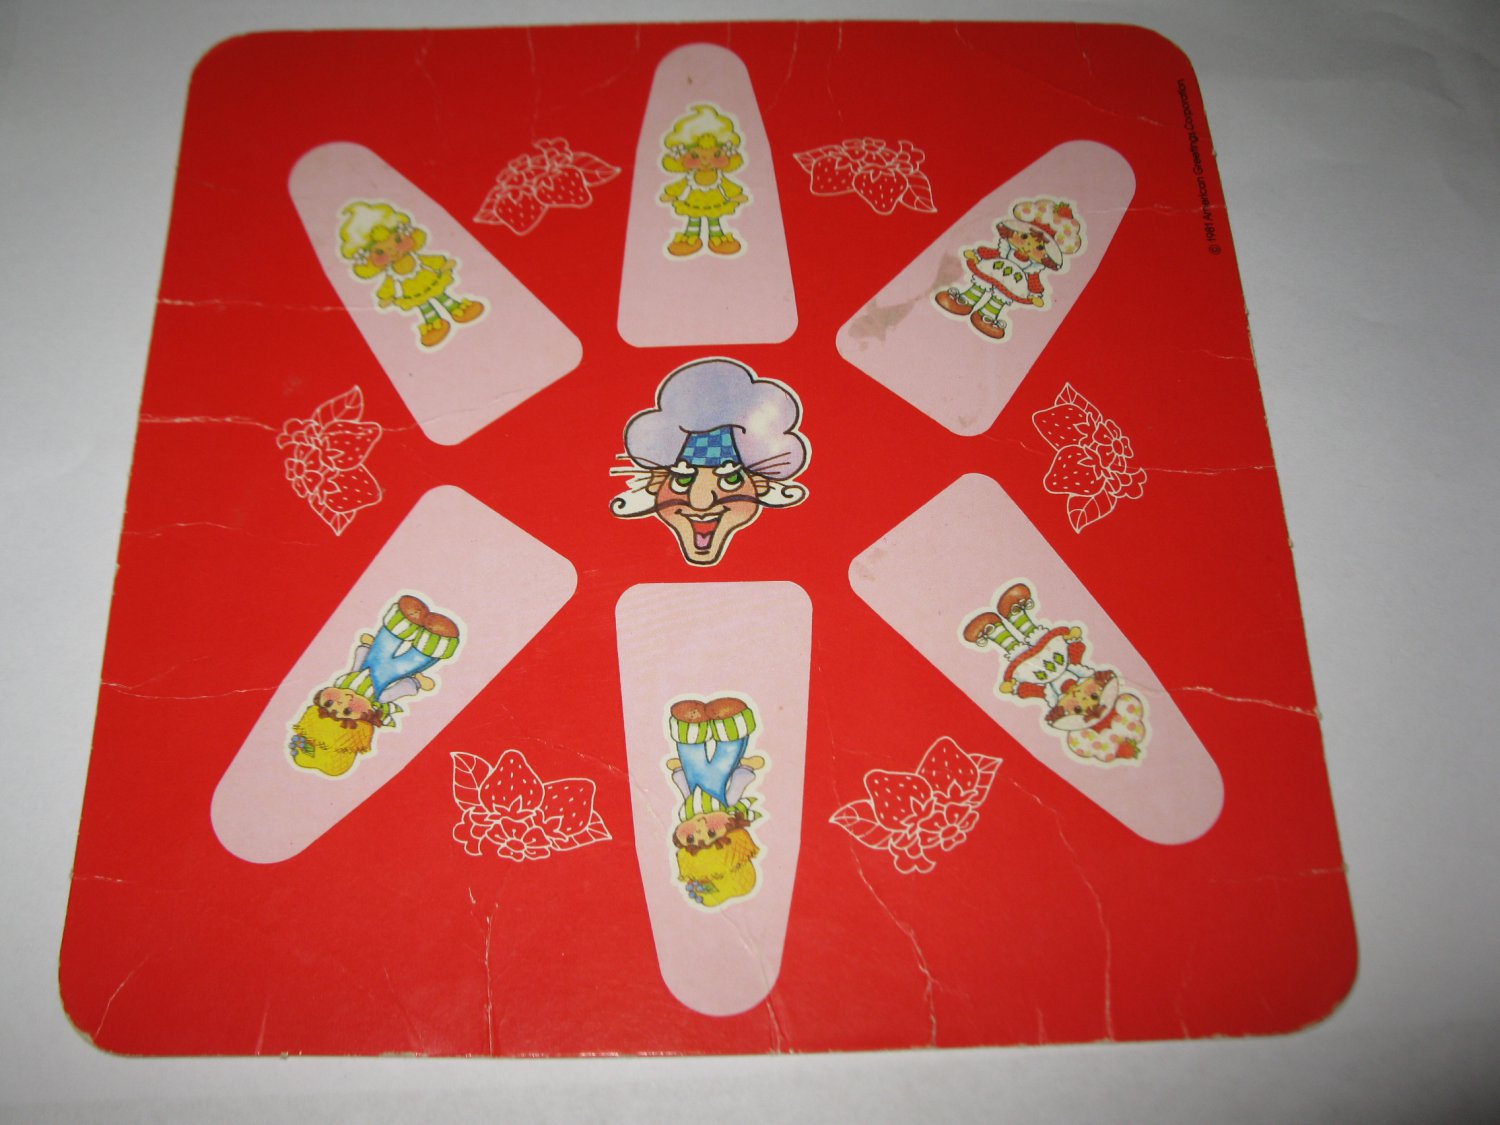 1981 Strawberry Shortcake 'Berry Go Round' Board Game Piece: Game Player Square #4